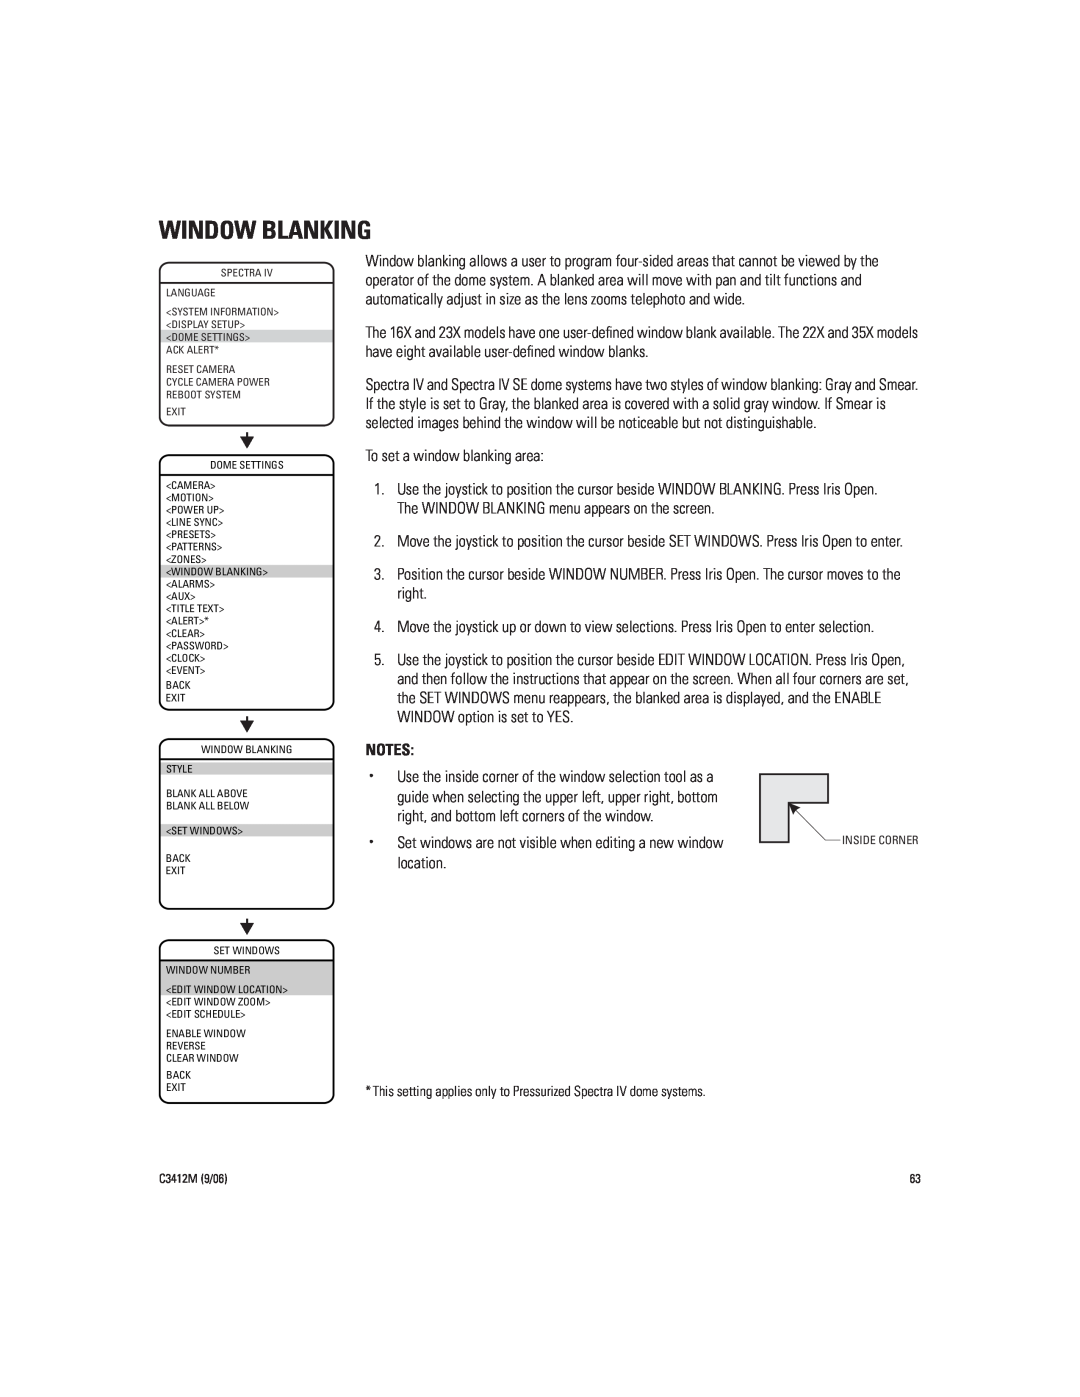 Pelco IV SE manual Window Blanking 